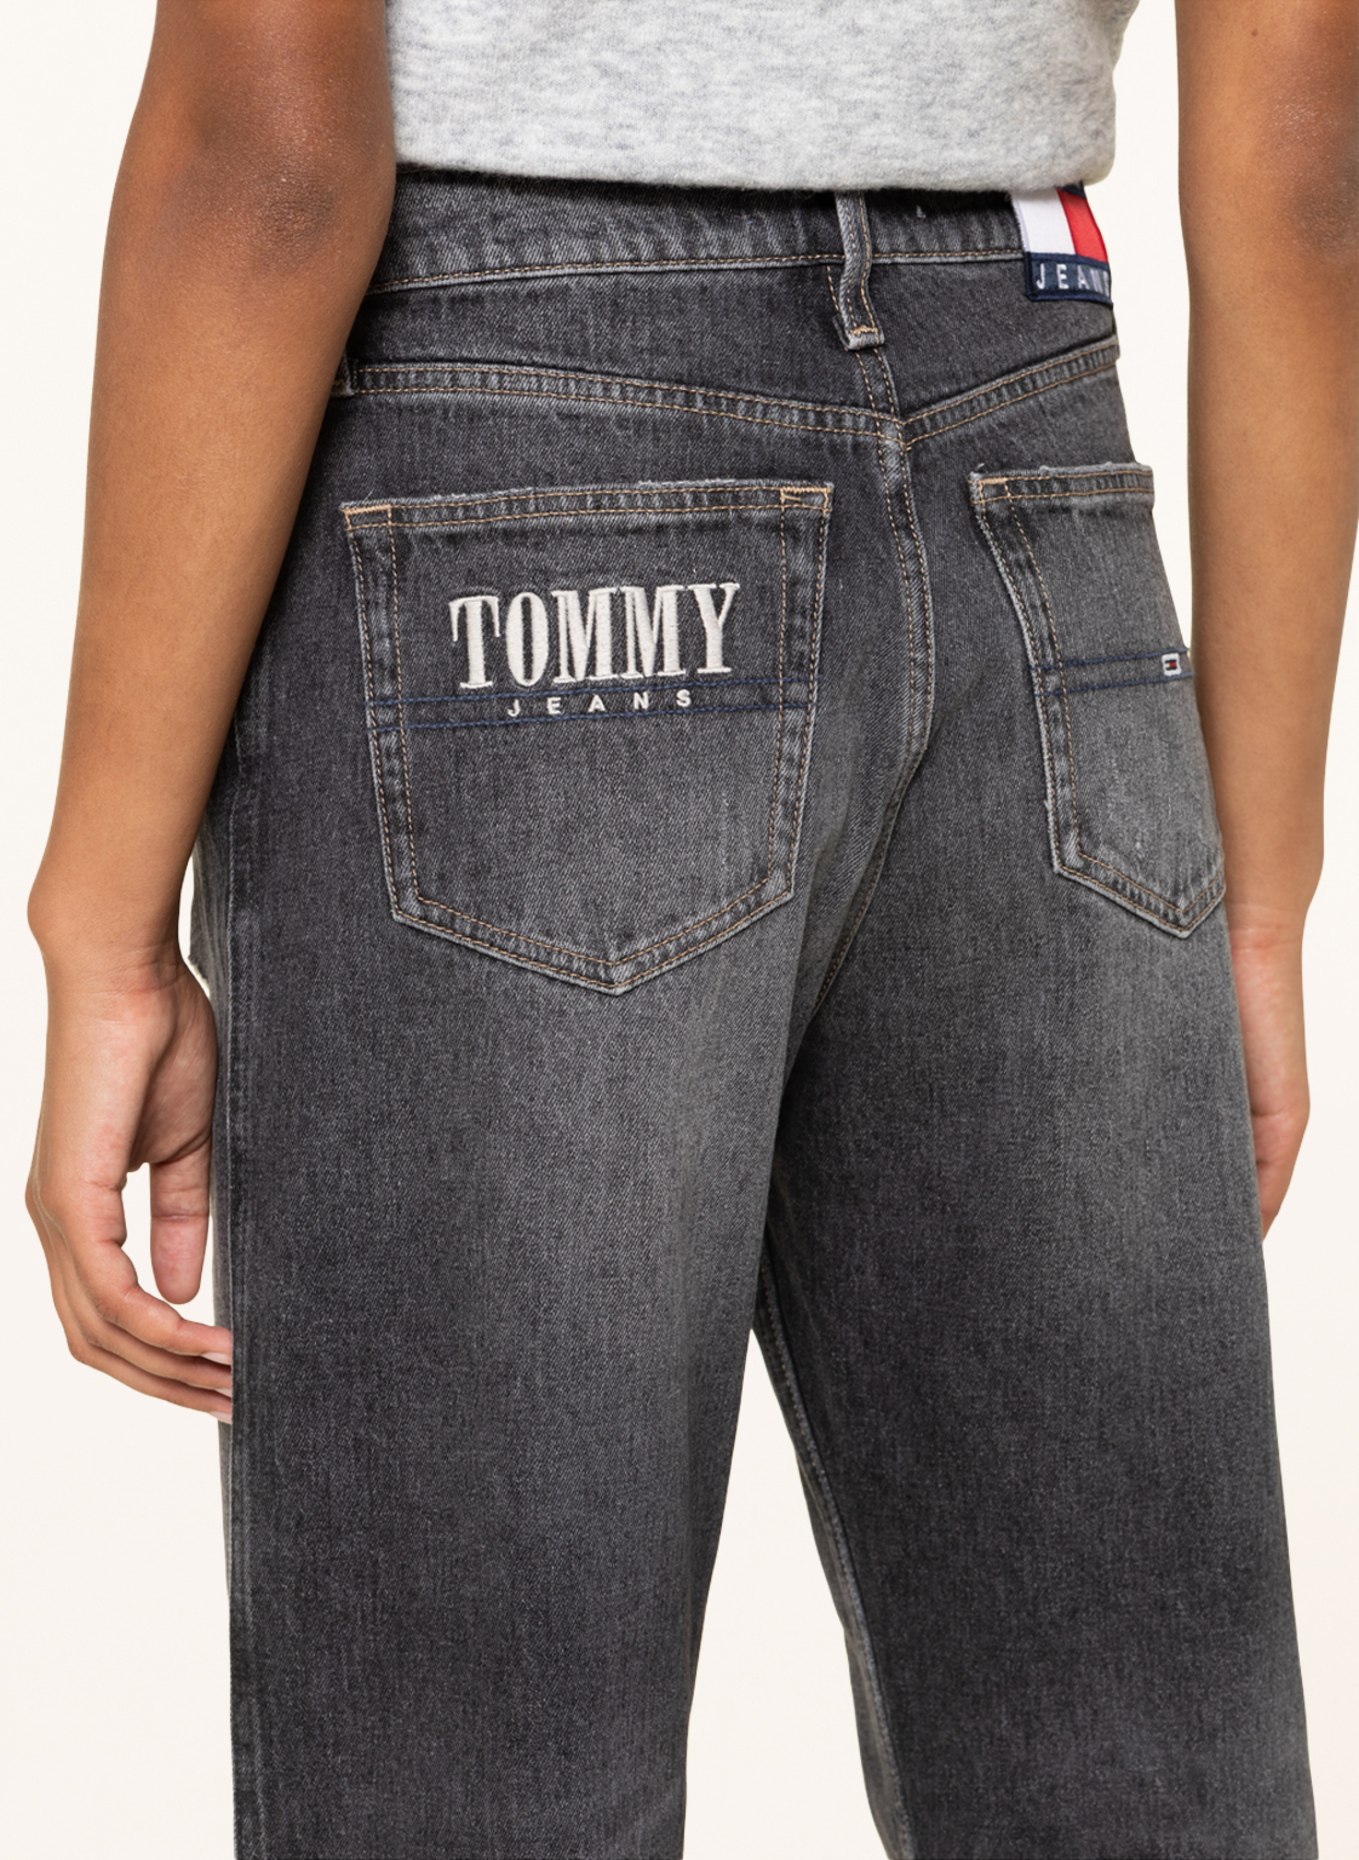 TOMMY JEANS Destroyed Jeans BETSY, Farbe: 1BZ Denim Black (Bild 5)